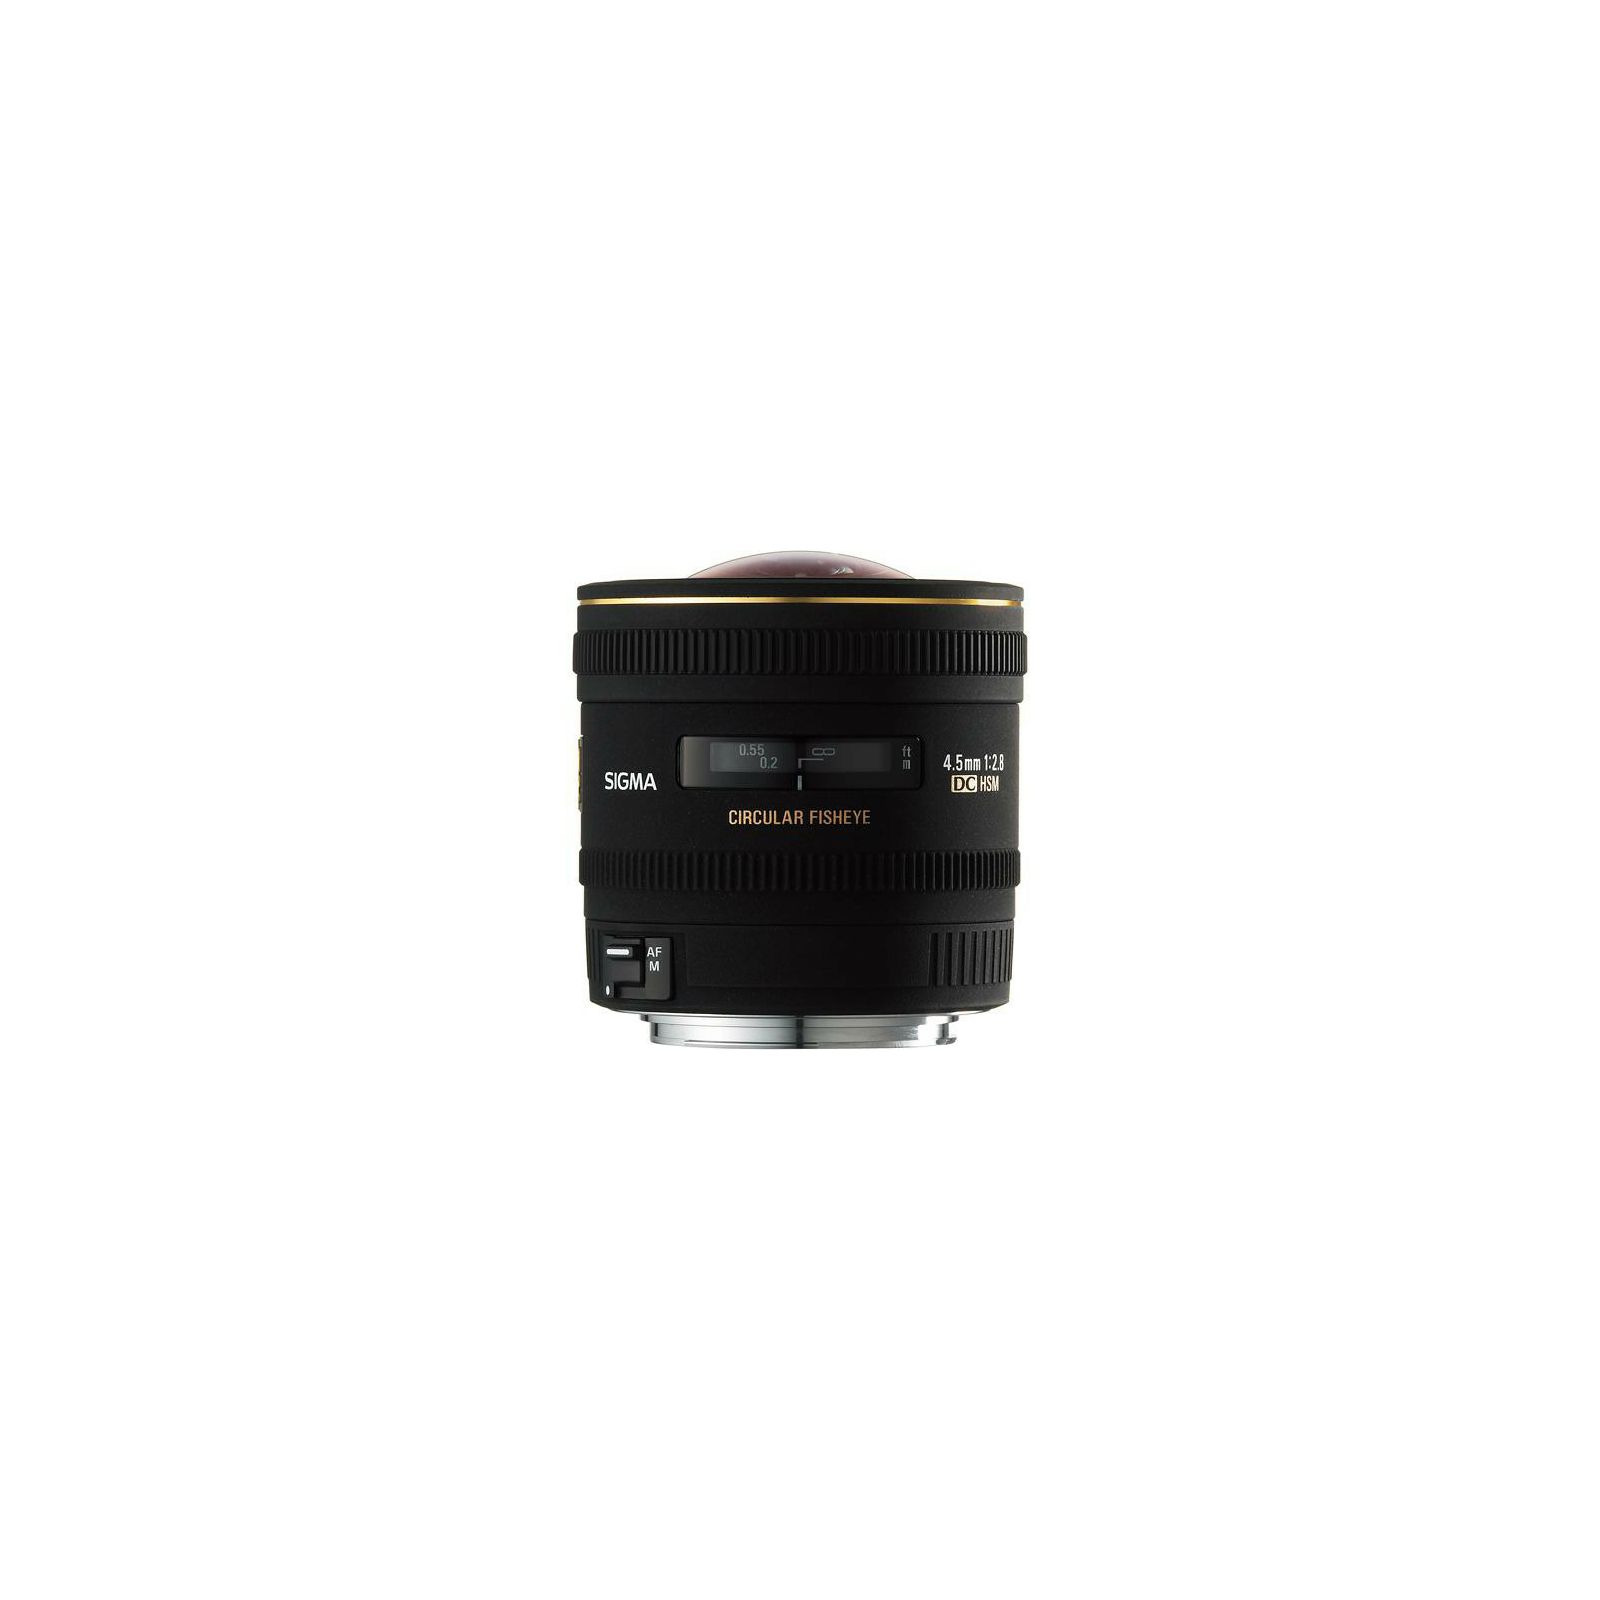 Sigma 4.5mm f/2.8 EX DC HSM Fisheye objektiv za Sony A-mount cirkularni fish-eye lens 4,5 F2.8 4,5/2,8 f/2,8 (486962)